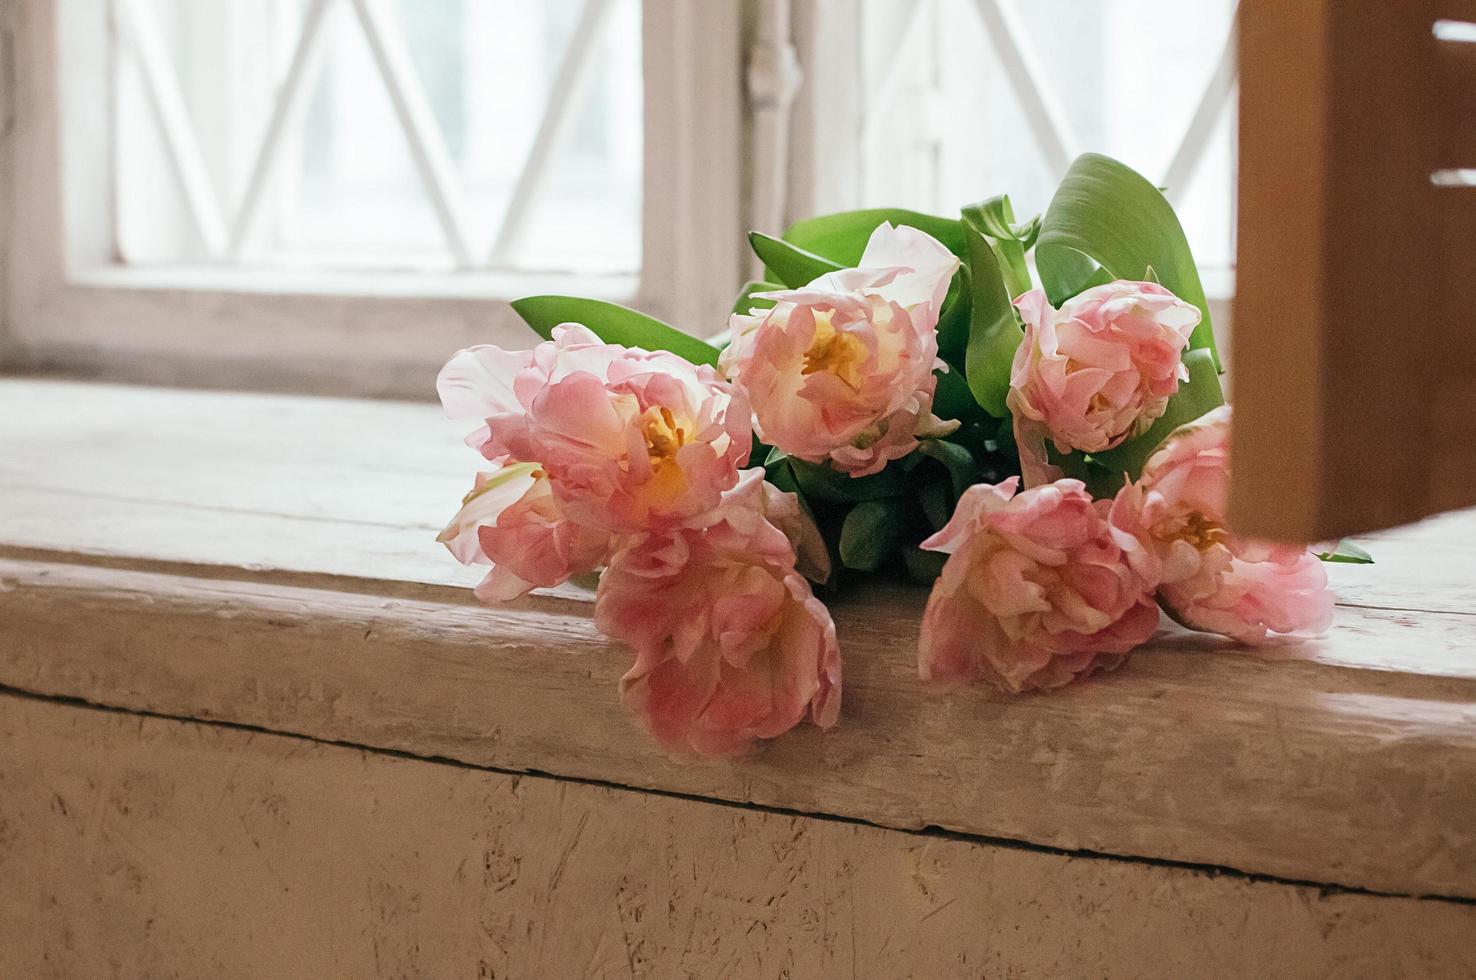 zacht gerichte roze pioen bloemen op witte vensterbank foto